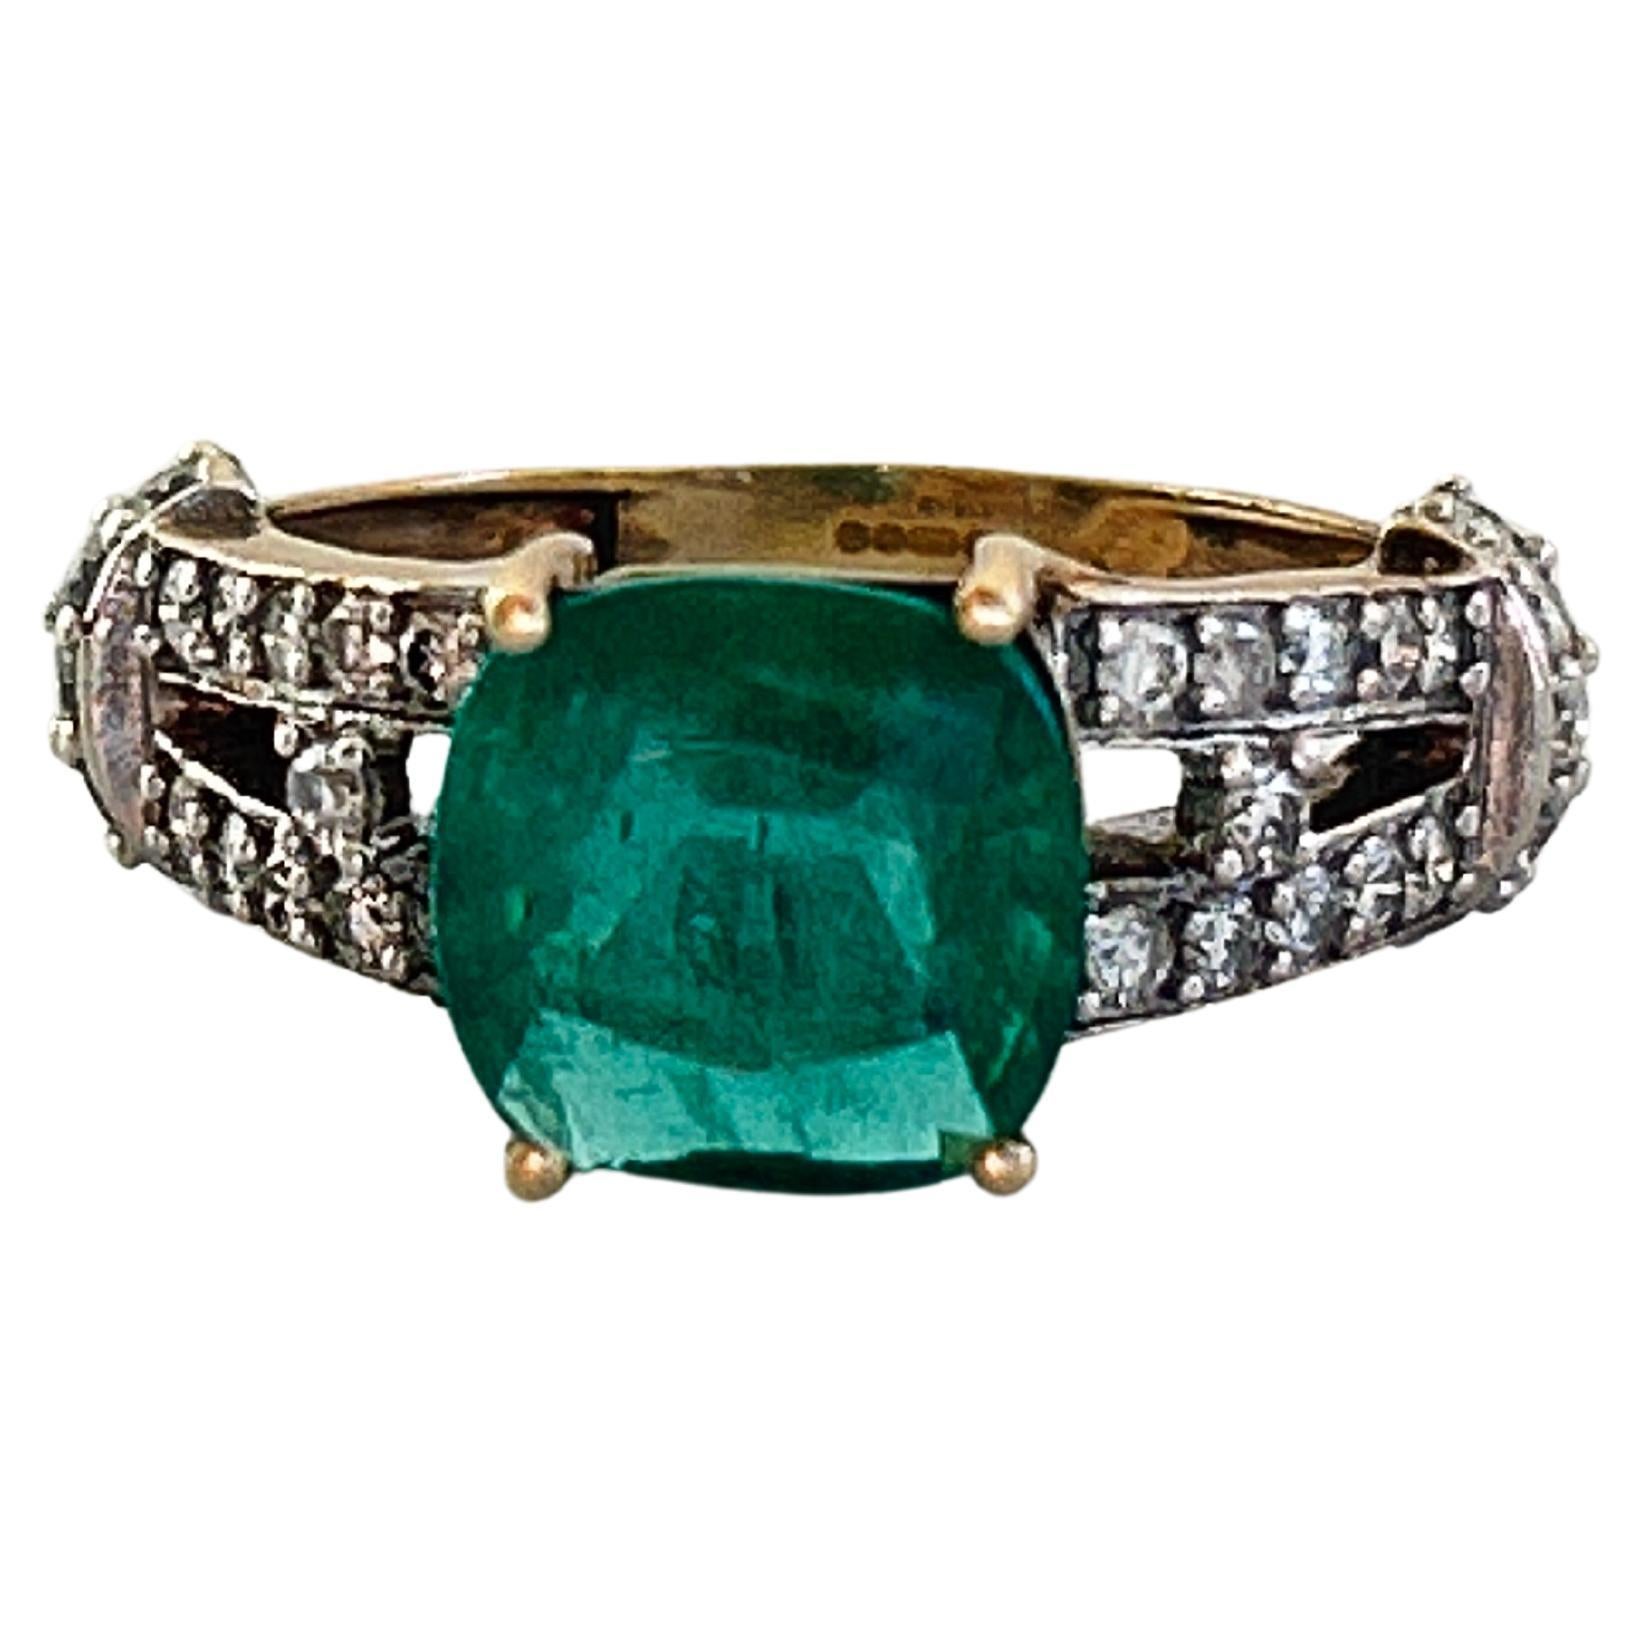 2.5 Carat Cushion Cut Columbian Emerald and .5ctw Diamond Ring